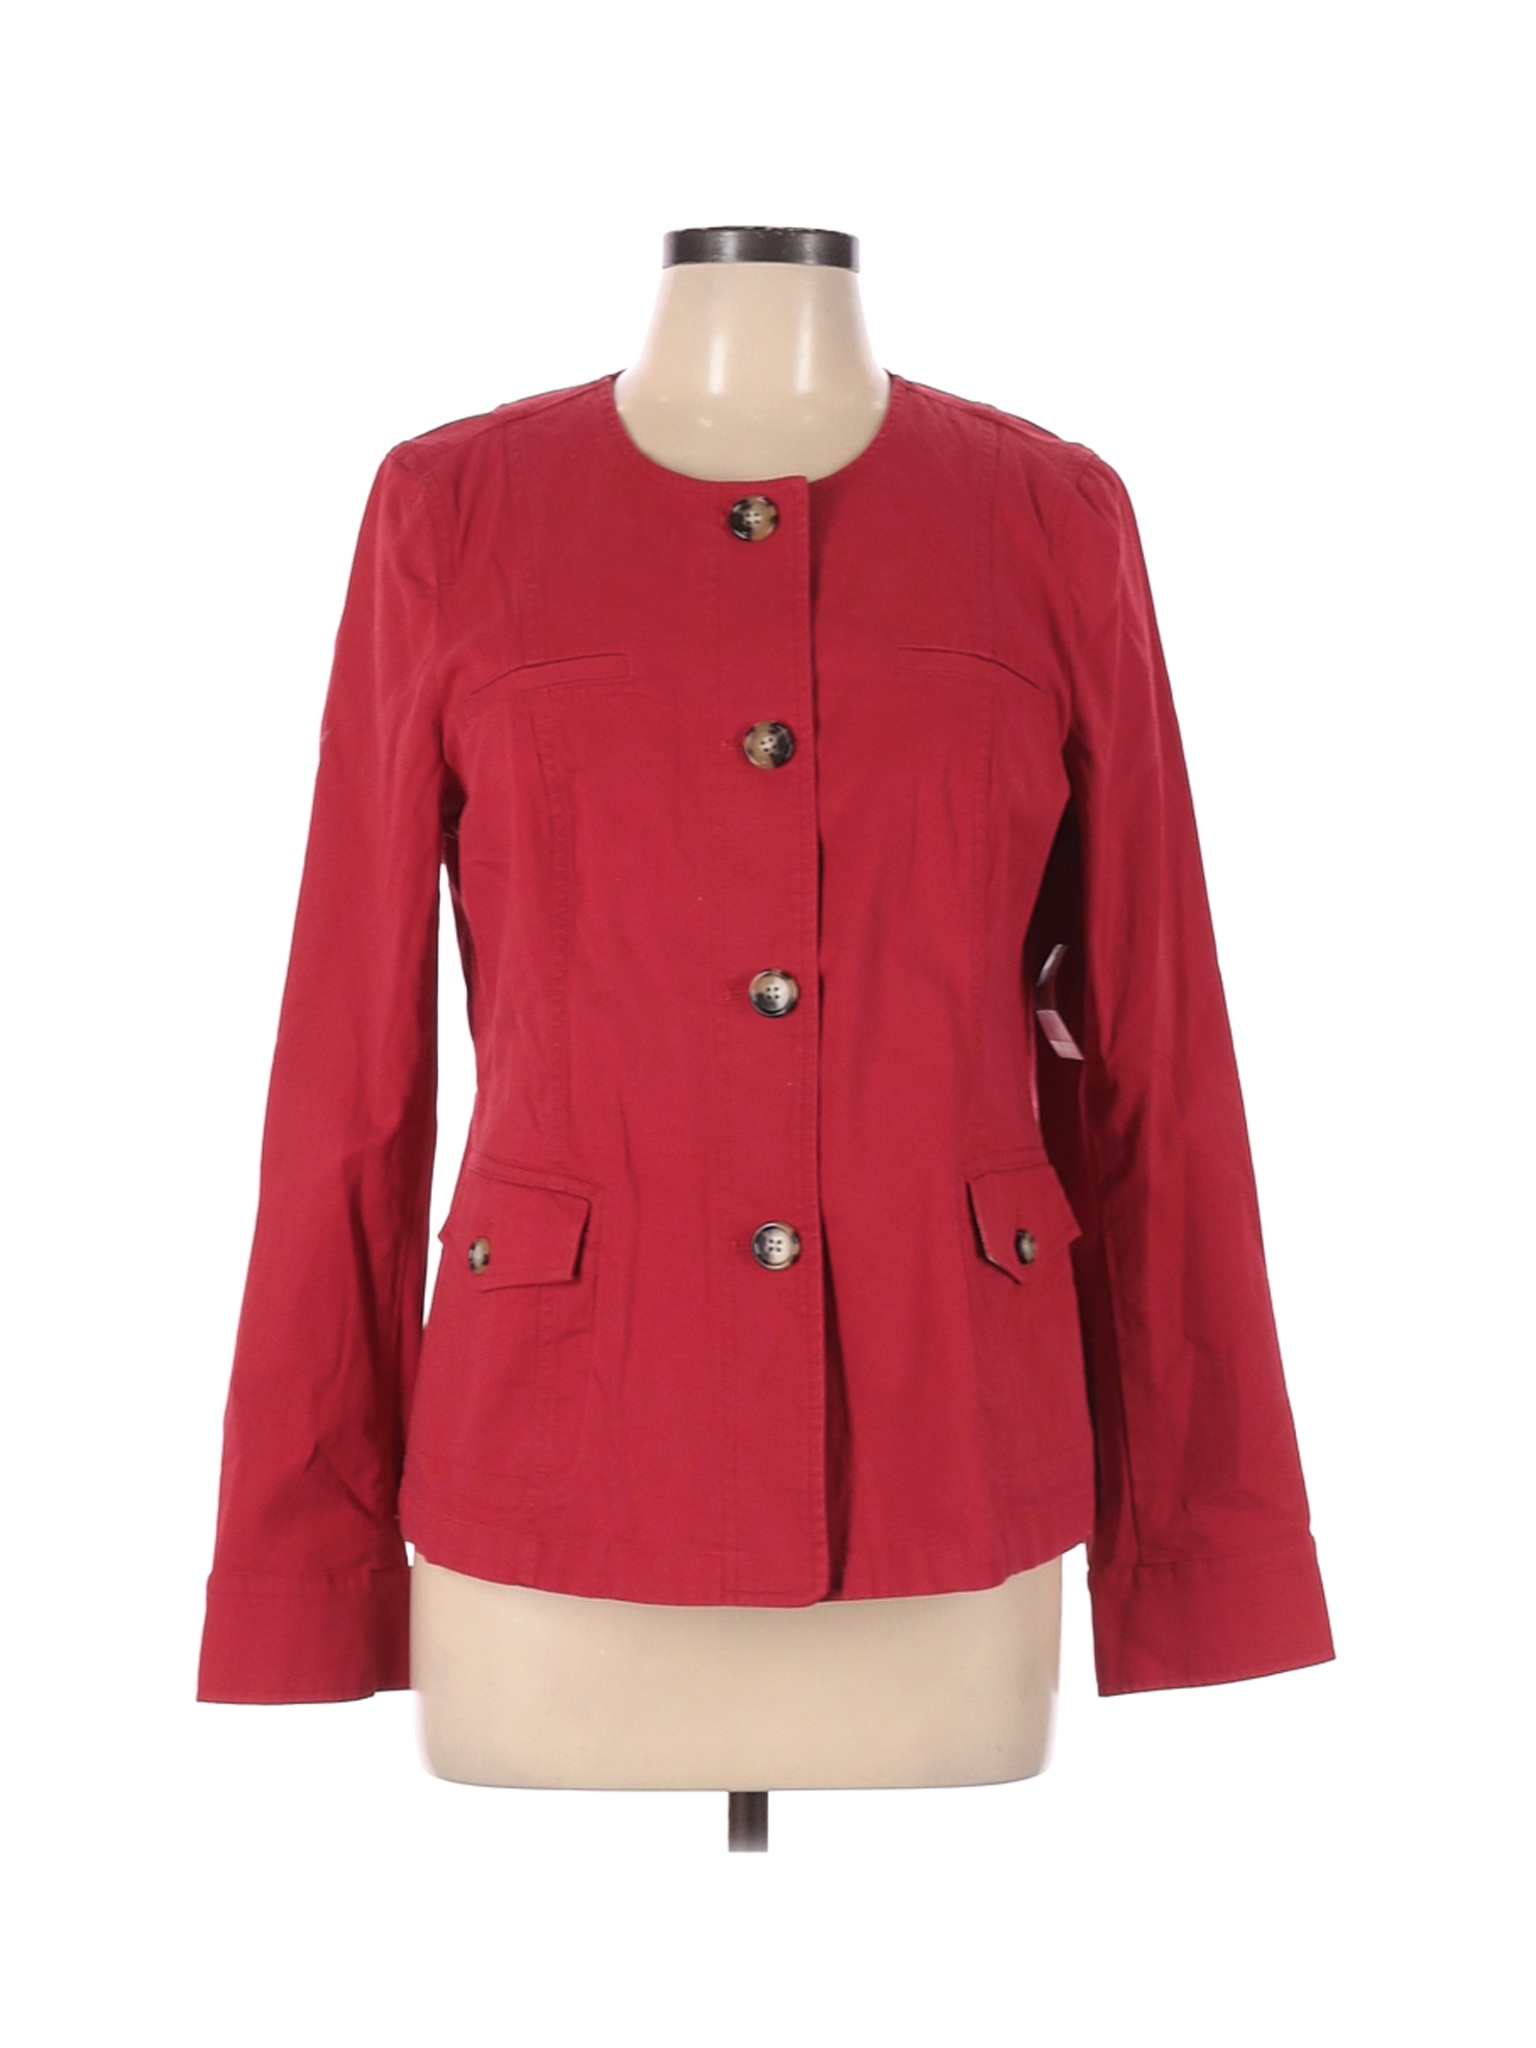 NWT Talbots Women Red Jacket 8 | eBay